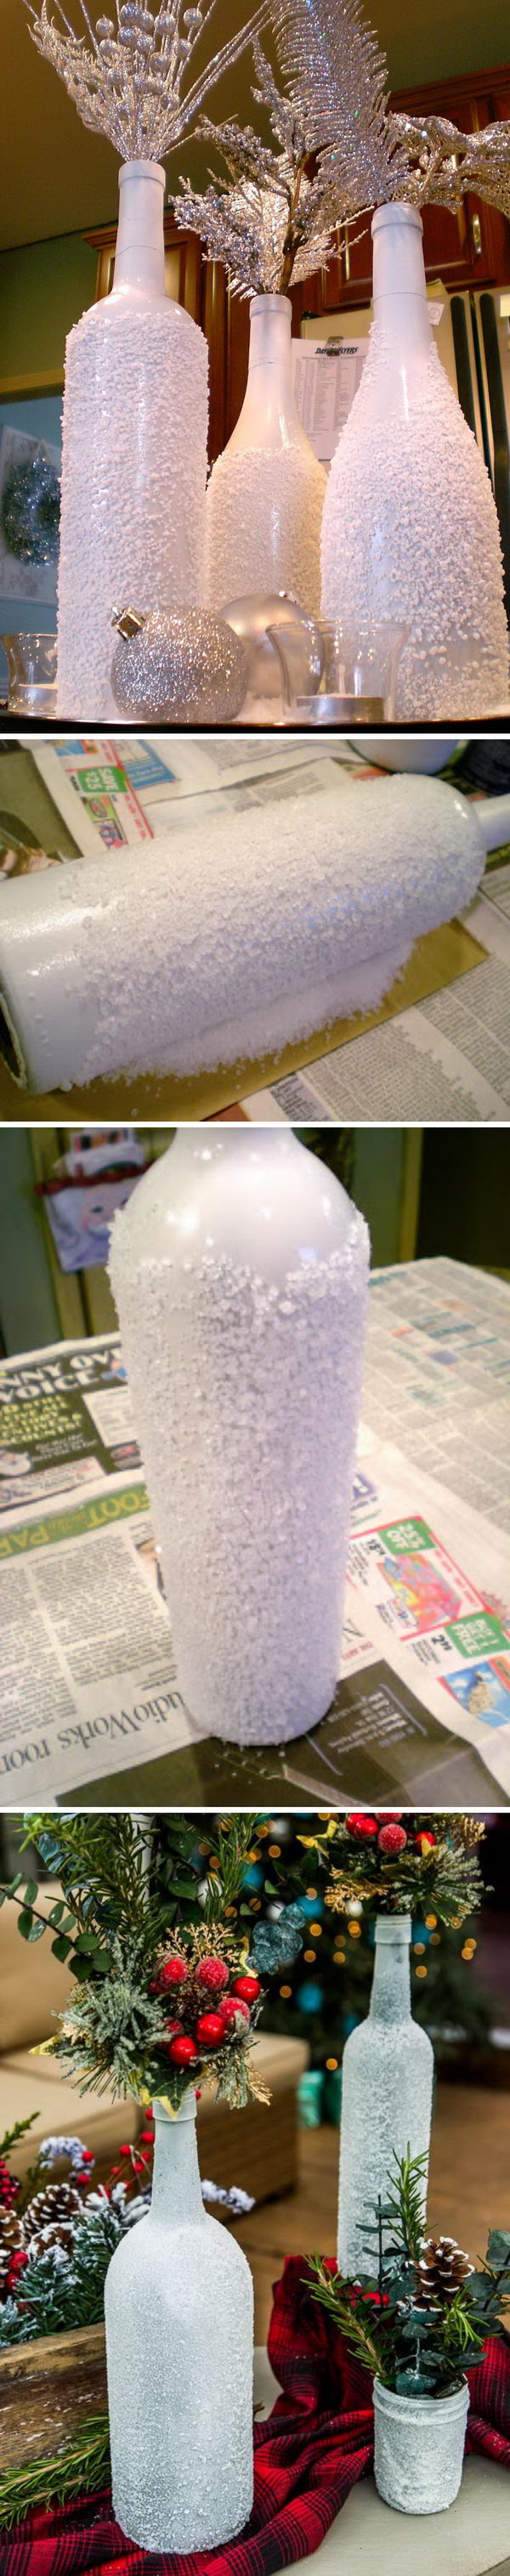 DIY Snow Vases From Wine Bottles. 